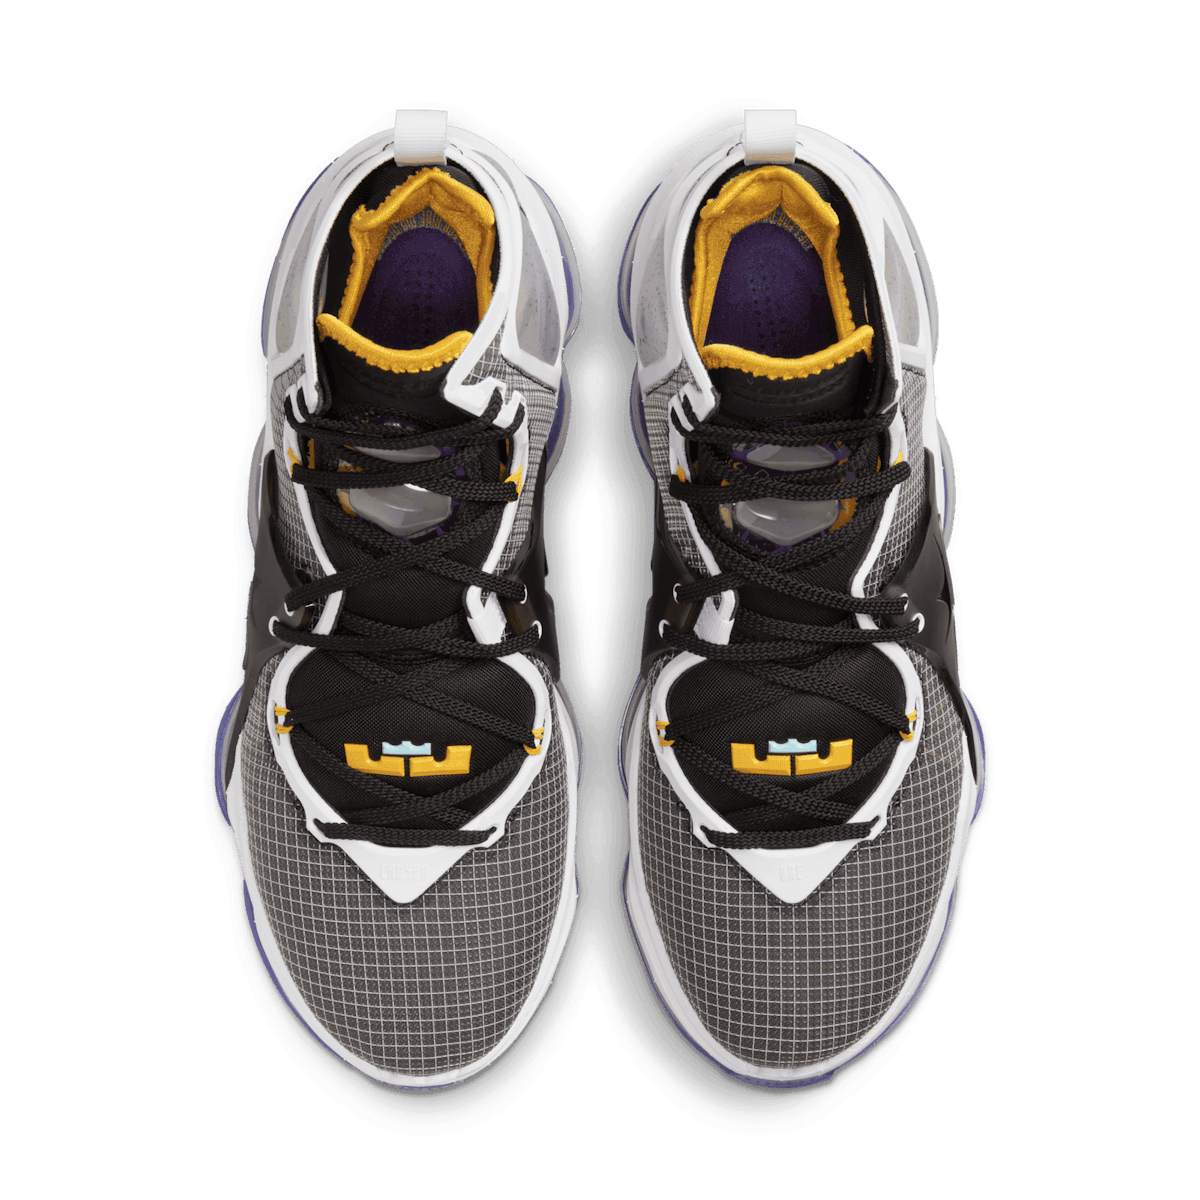 Nike LeBron 19 Basketball Shoes in Black Angle 1